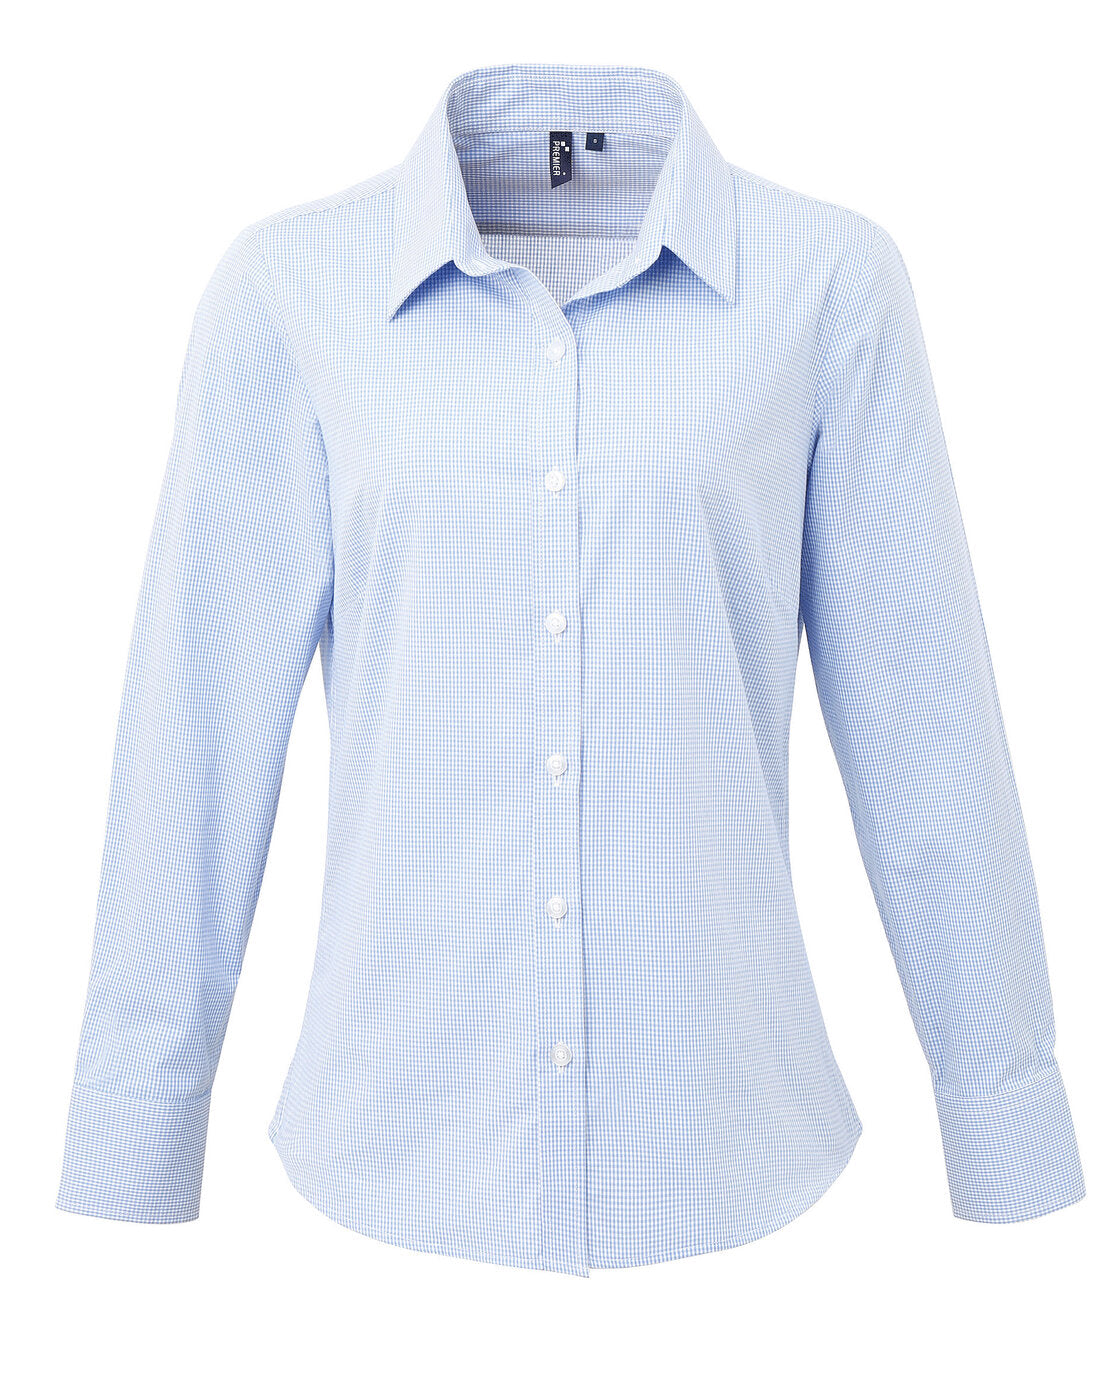 Premier Women's Long Sleeve Gingham Microcheck Shirt